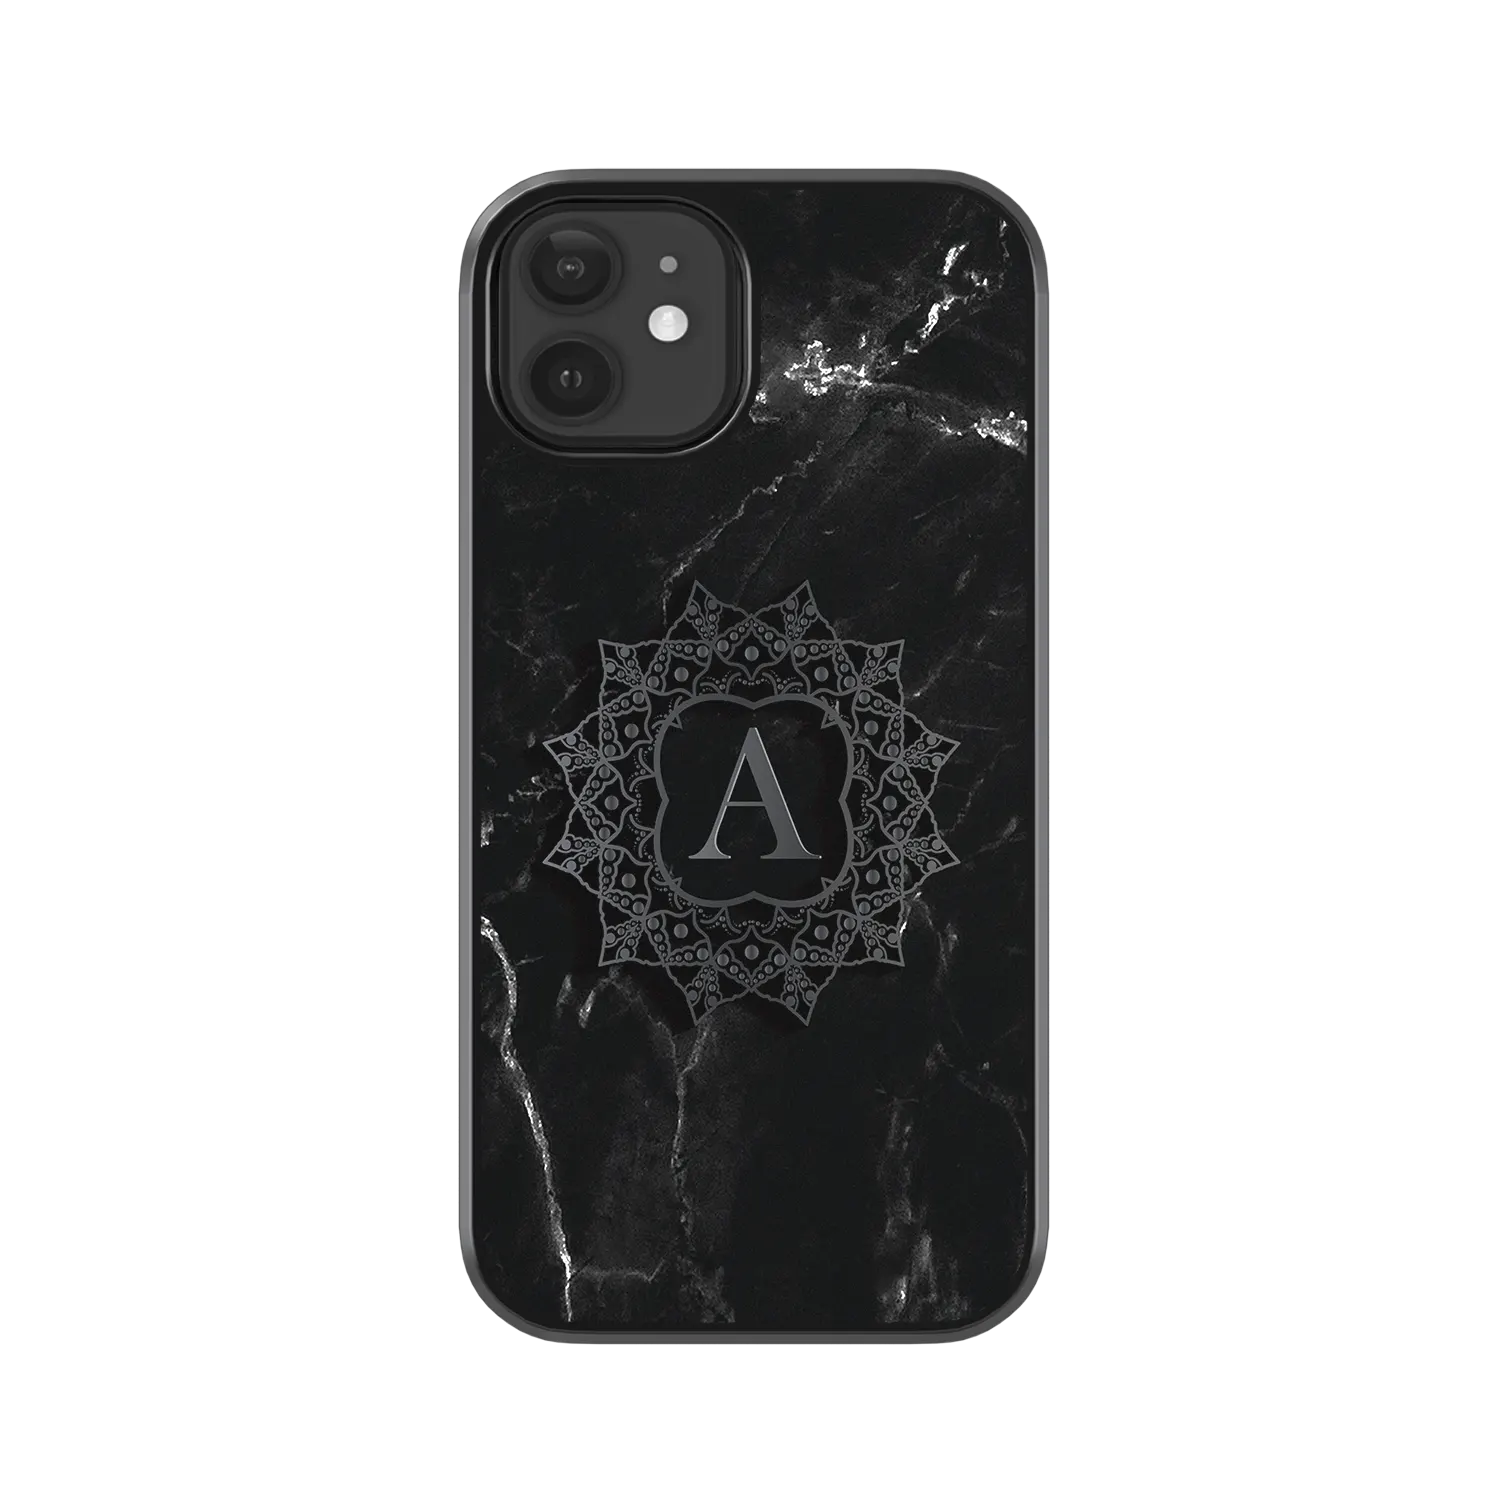 Achlys iphone 12 mini cover